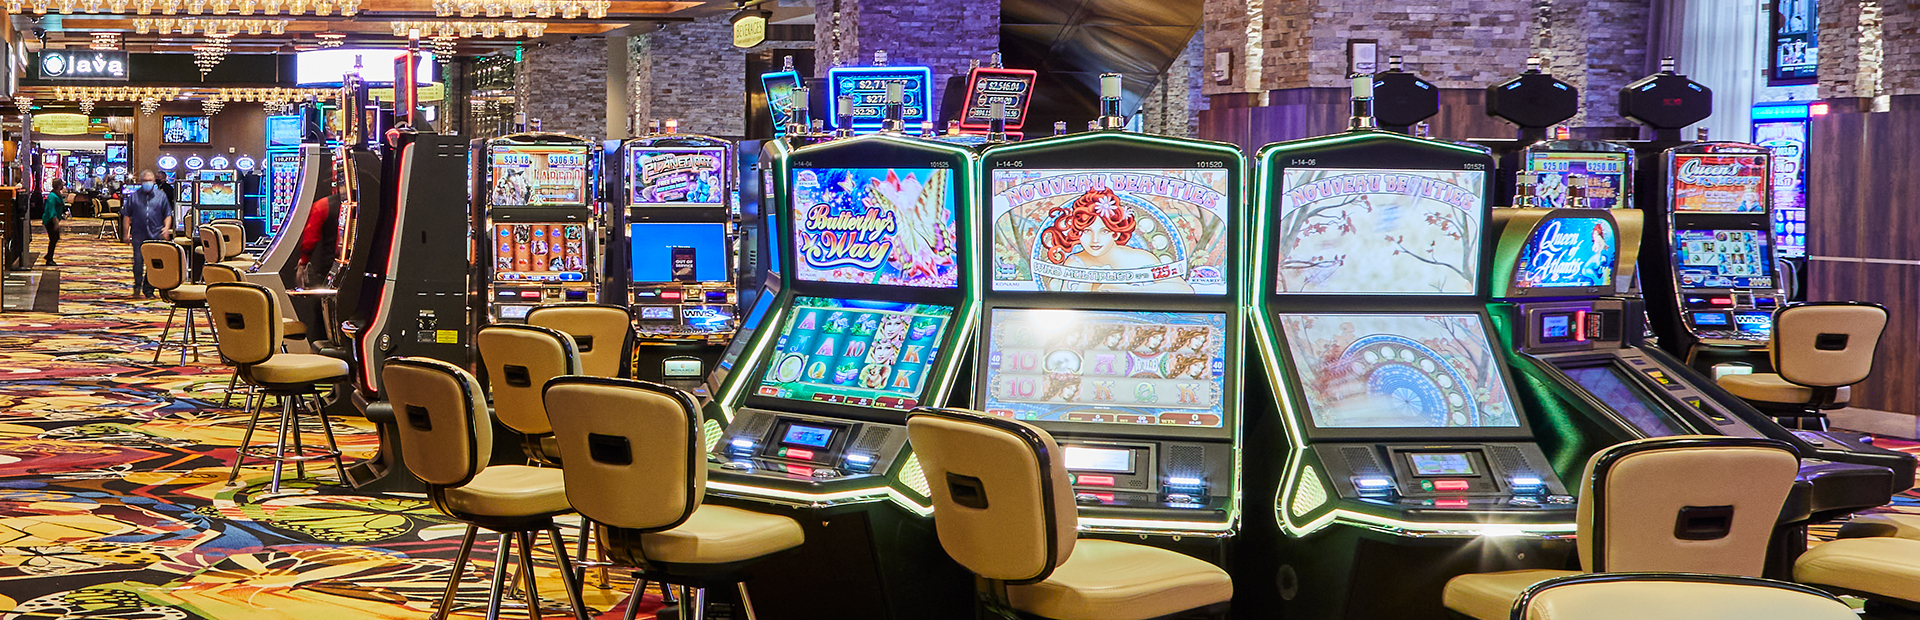 Monarch Casino Resort Spa - Casino Gaming Floor